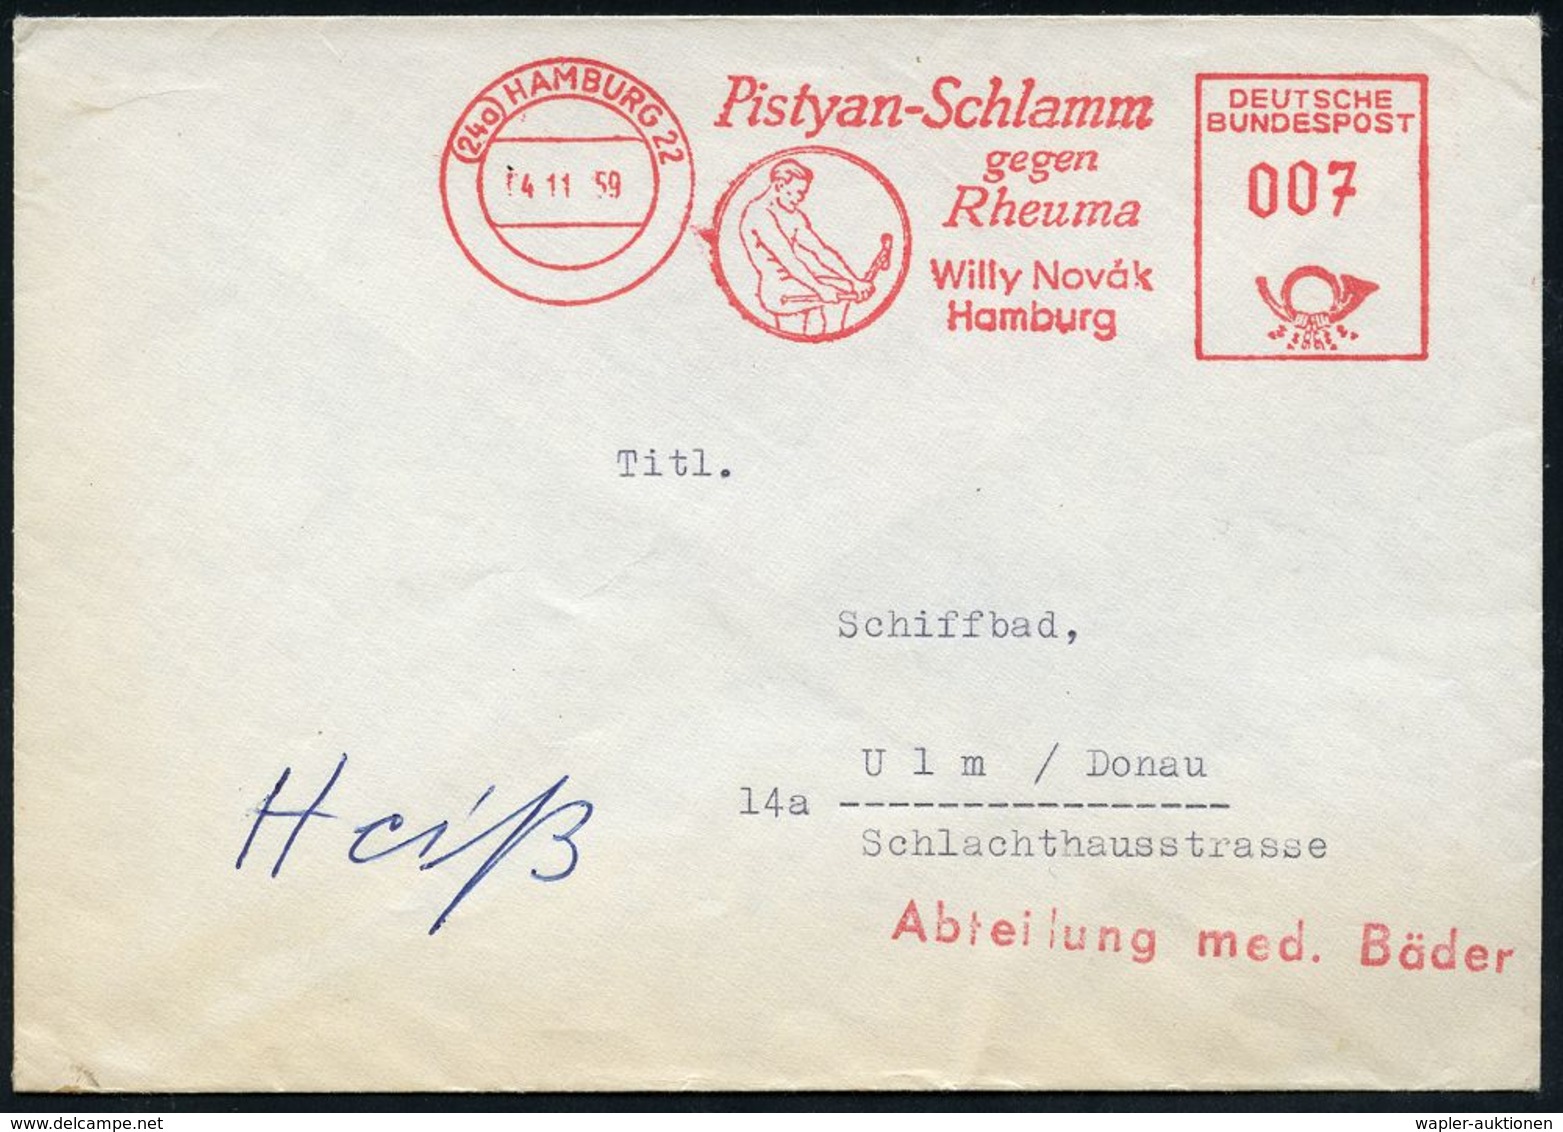 RHEUMATISMUS : (24a) HAMBURG 22/ Pistyan-Schlamm/ Gegen/ Rheuma/ Willy Novak 1959 (4.11.) AFS (Mann Zerbricht Krückstock - Maladies